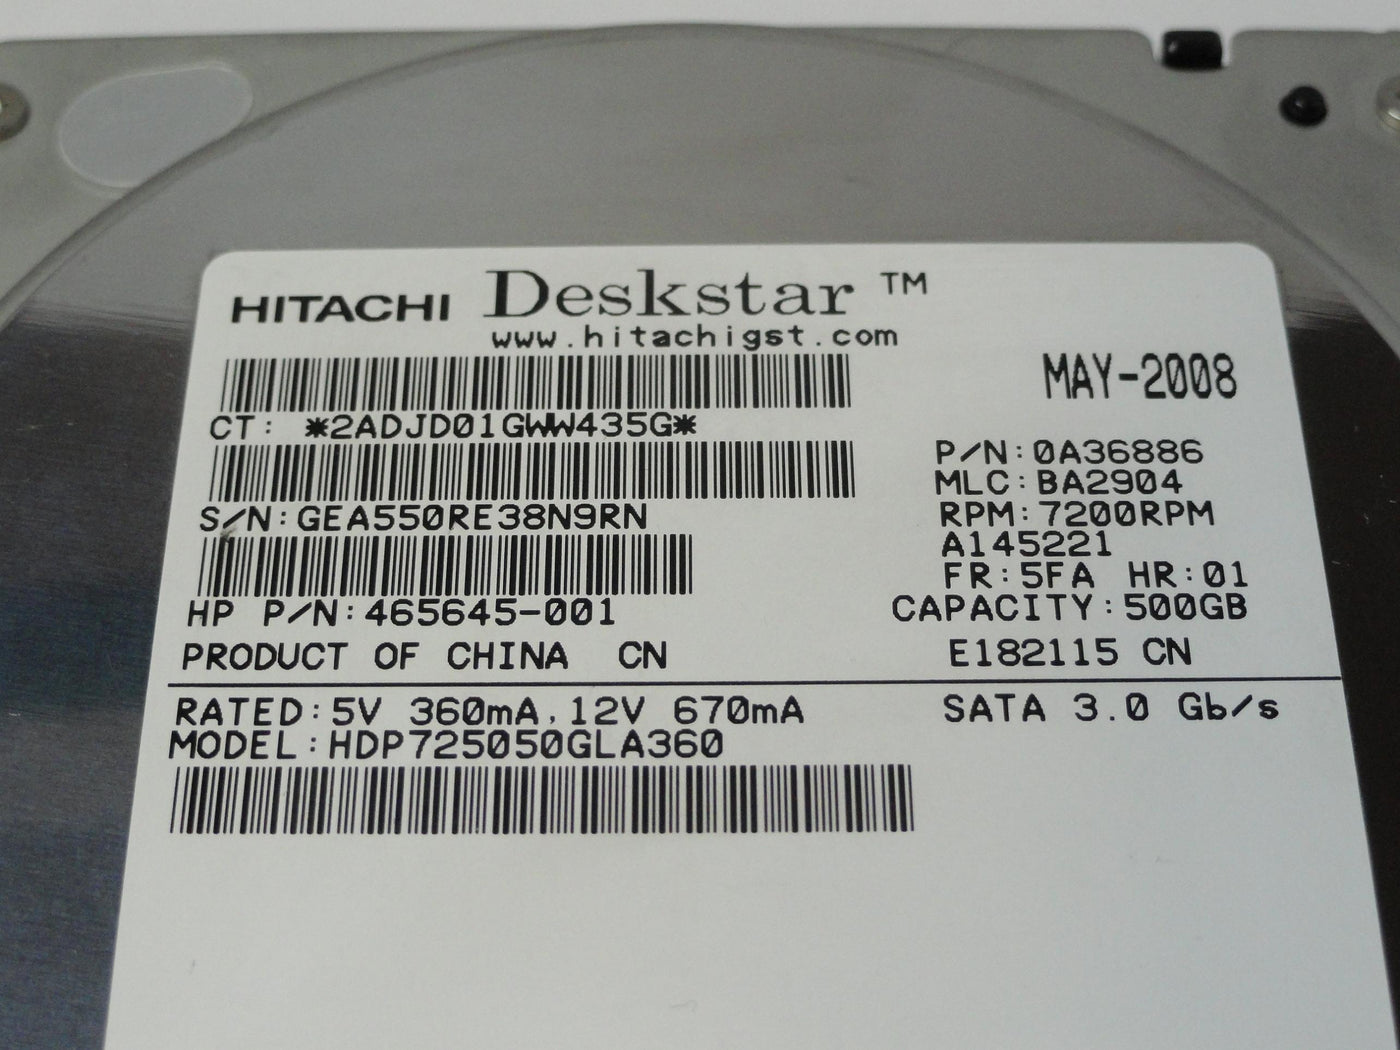 PR20117_0A36886_Hitachi HP 500GB SATA 7200rpm 3.5in HDD - Image3